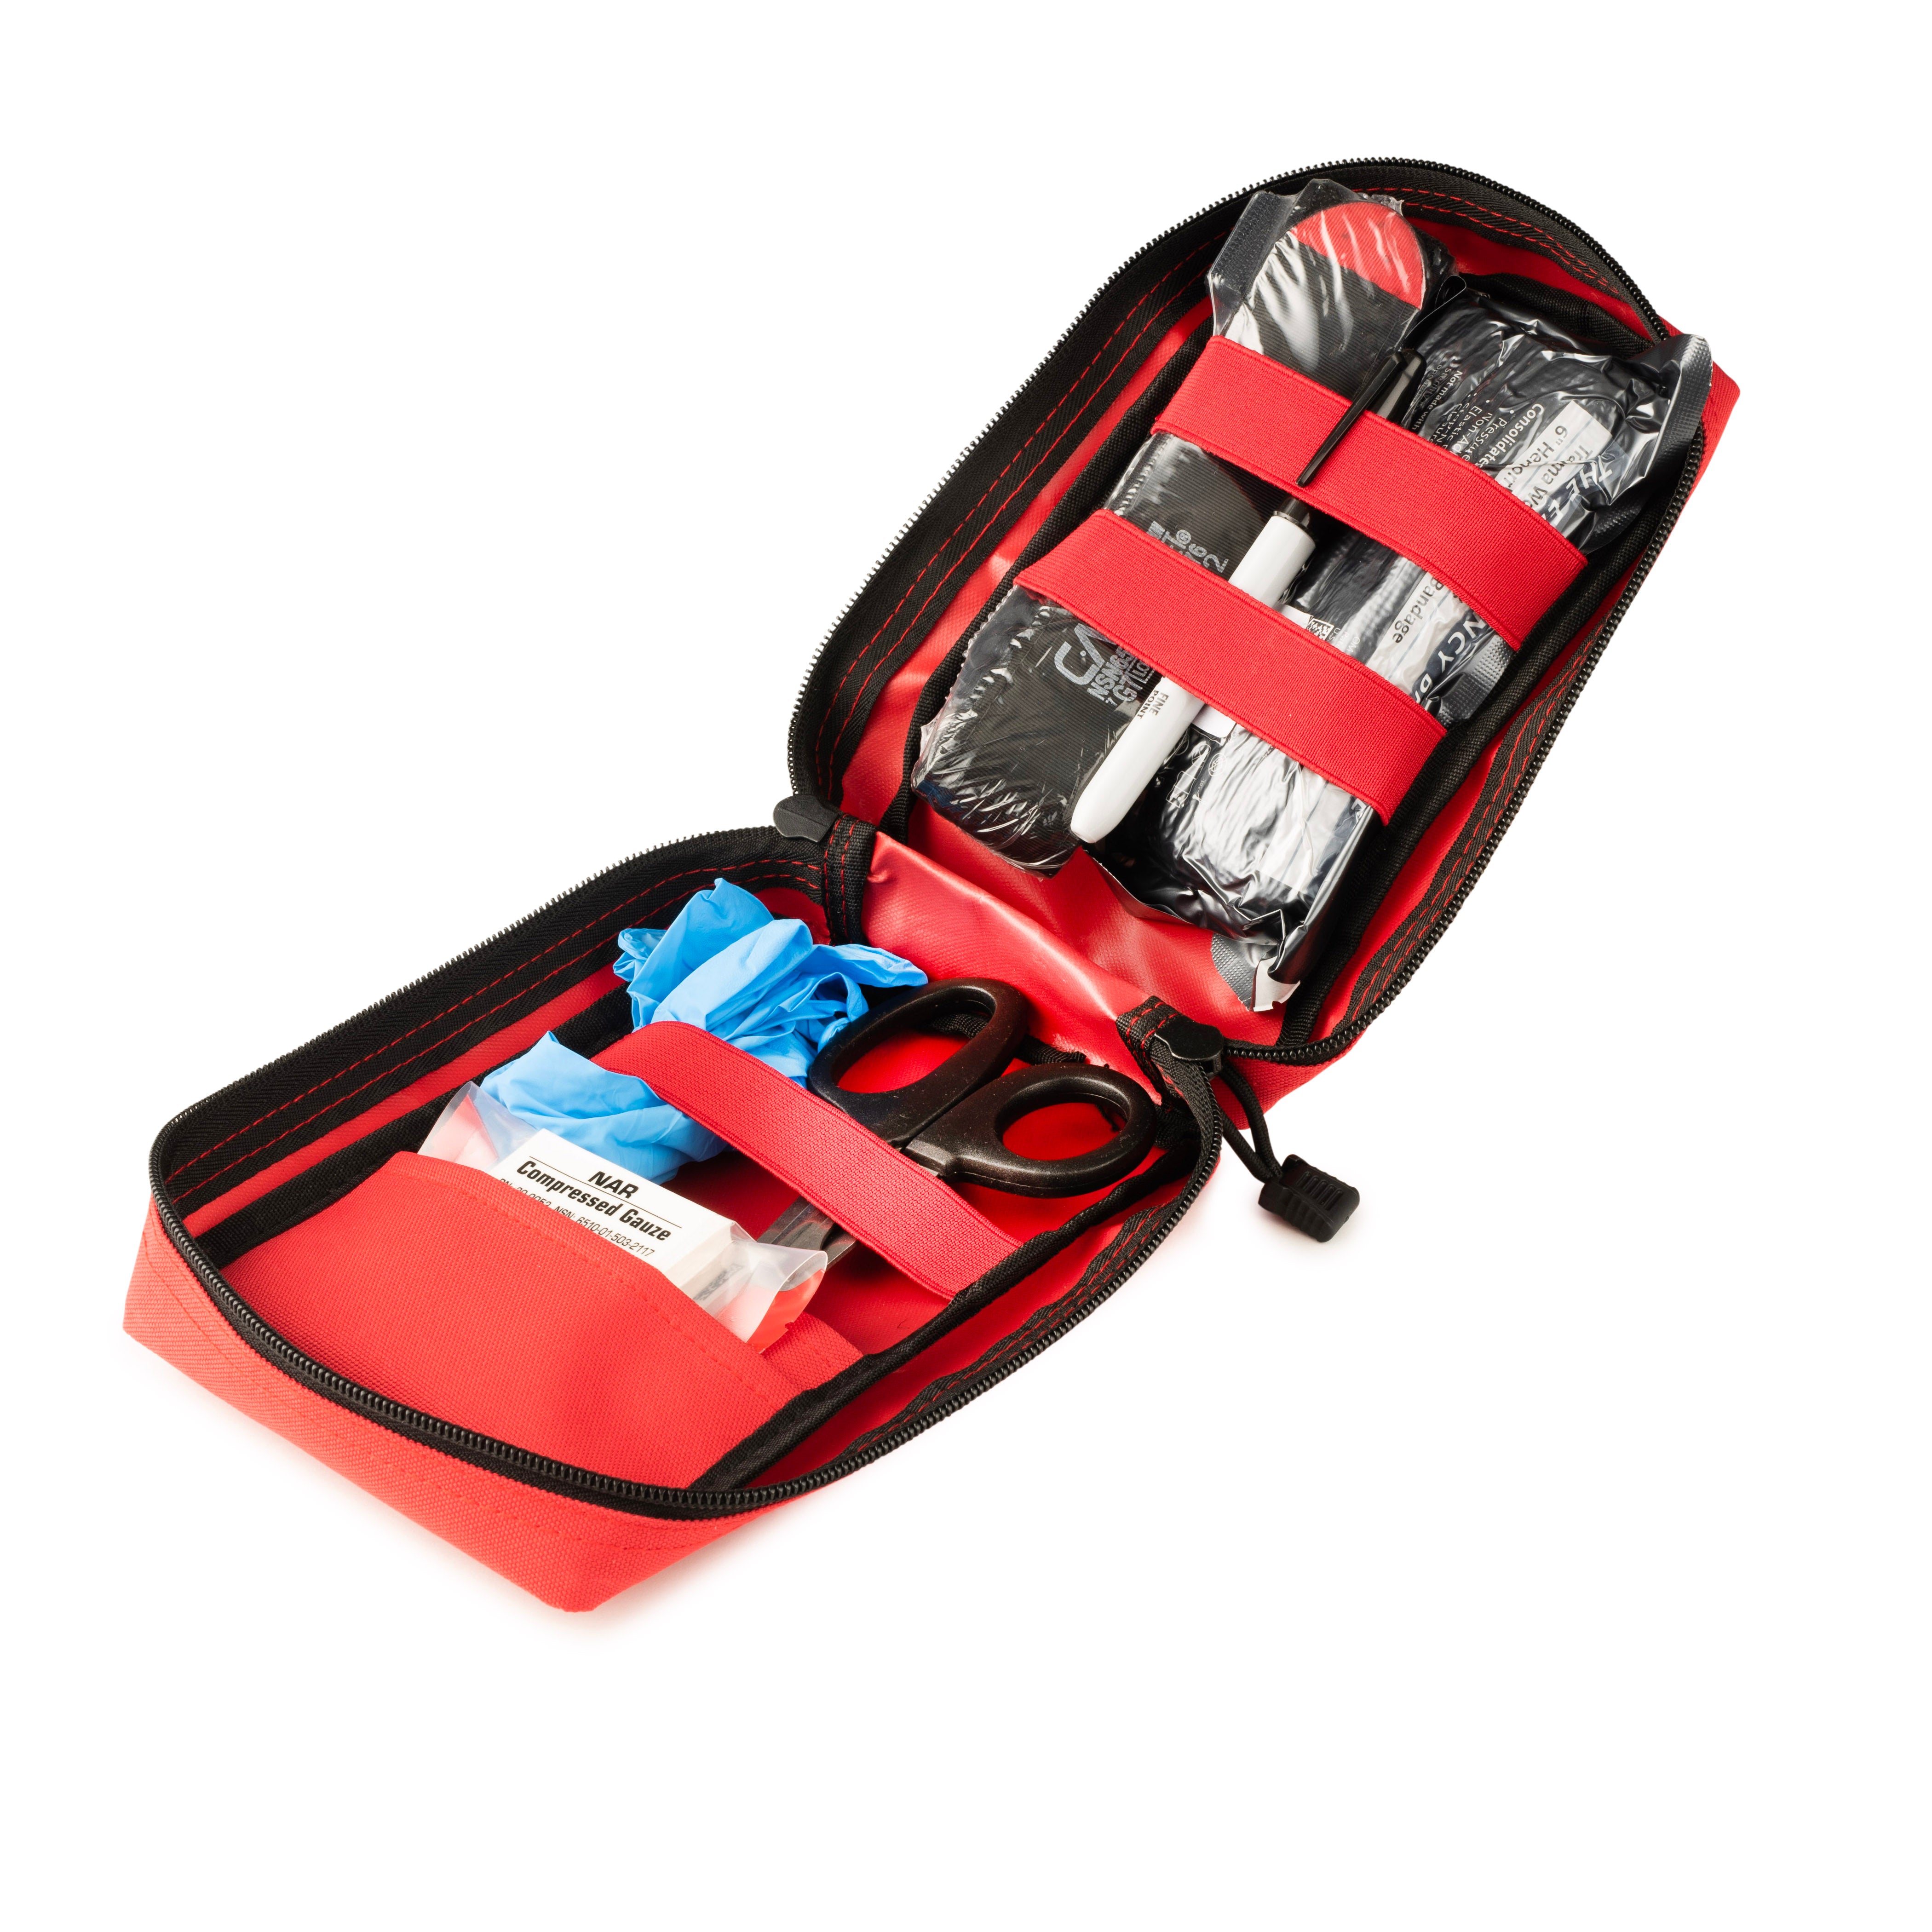 Scherber Public Access Bleeding Control Kit | Trauma Equipment, First Aid Supplies | Basic